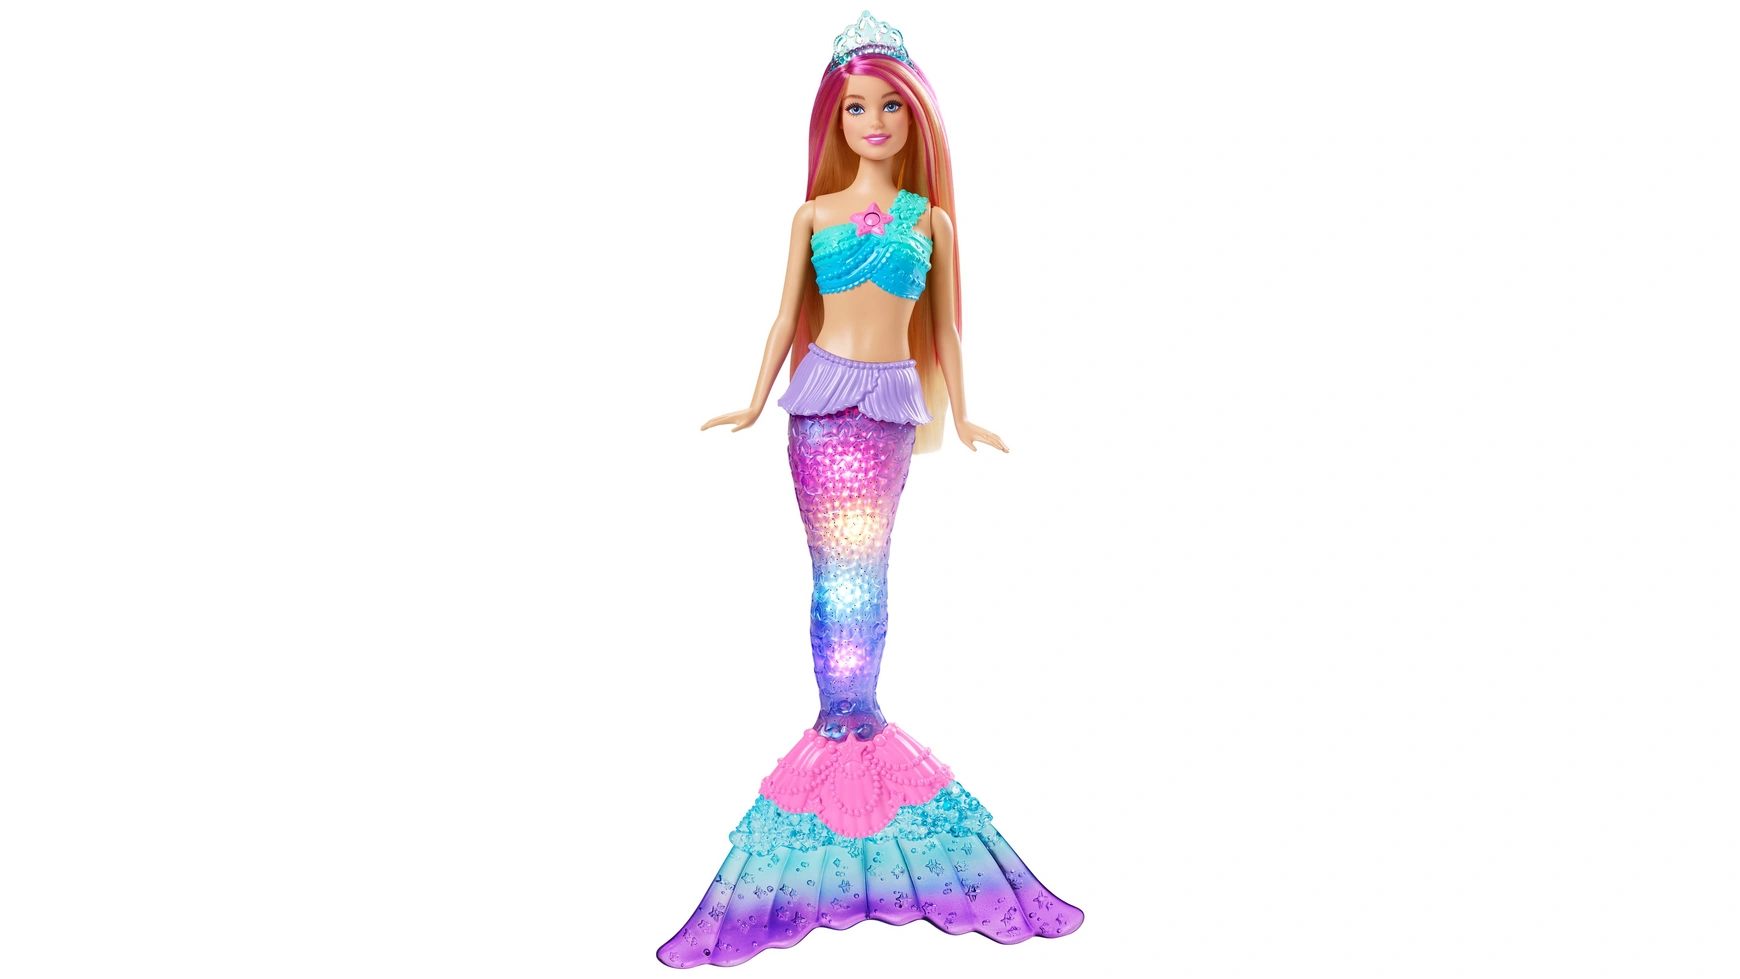 Кукла Barbie Волшебная светящаяся русалка (загорается), Barbie Dreamtopia фото